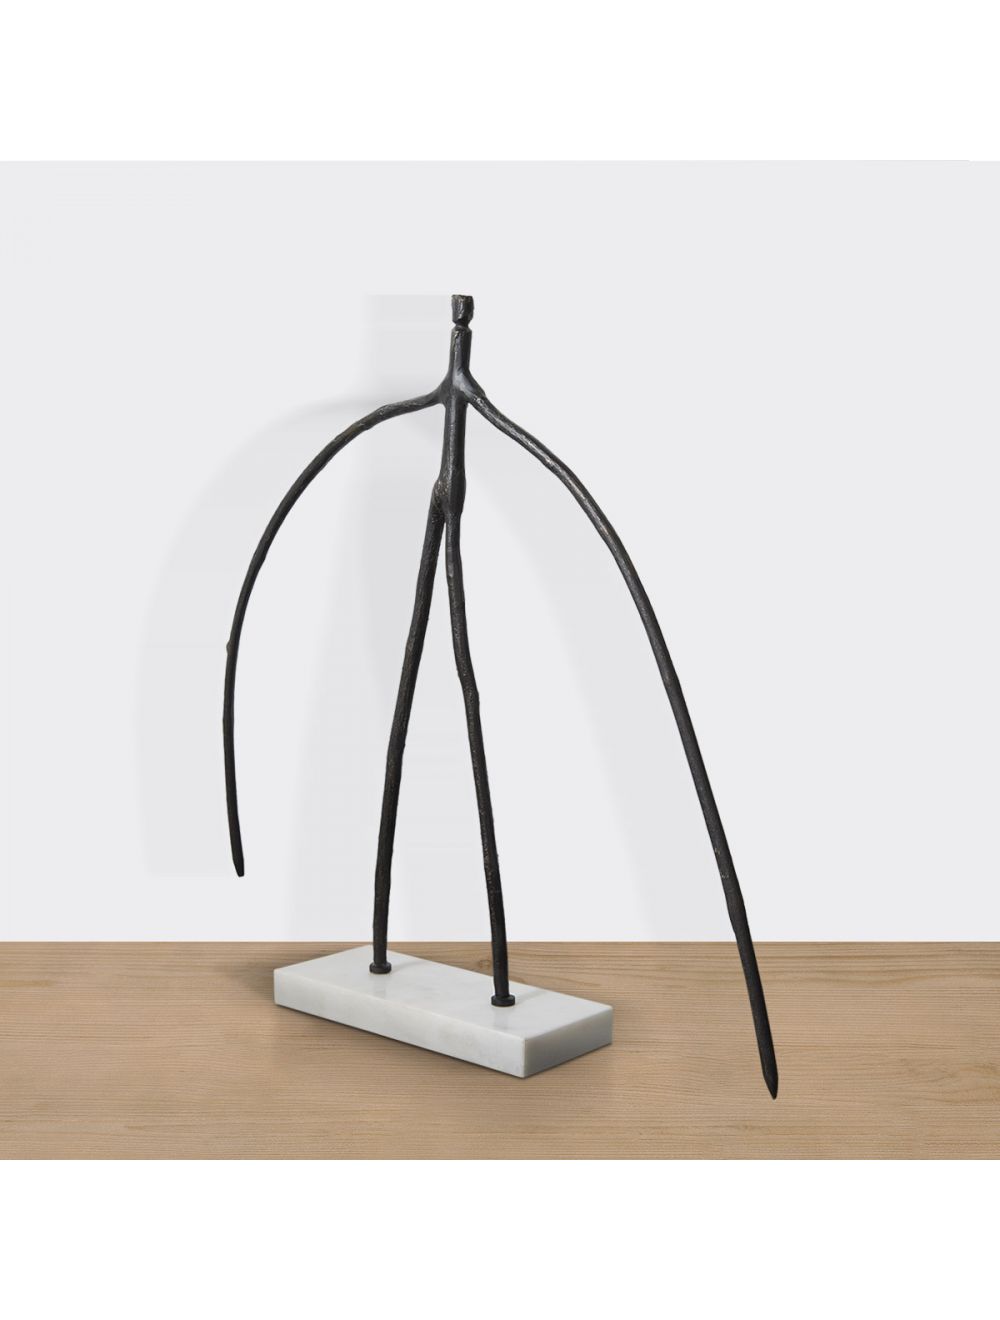 Stick Men Sculpture II